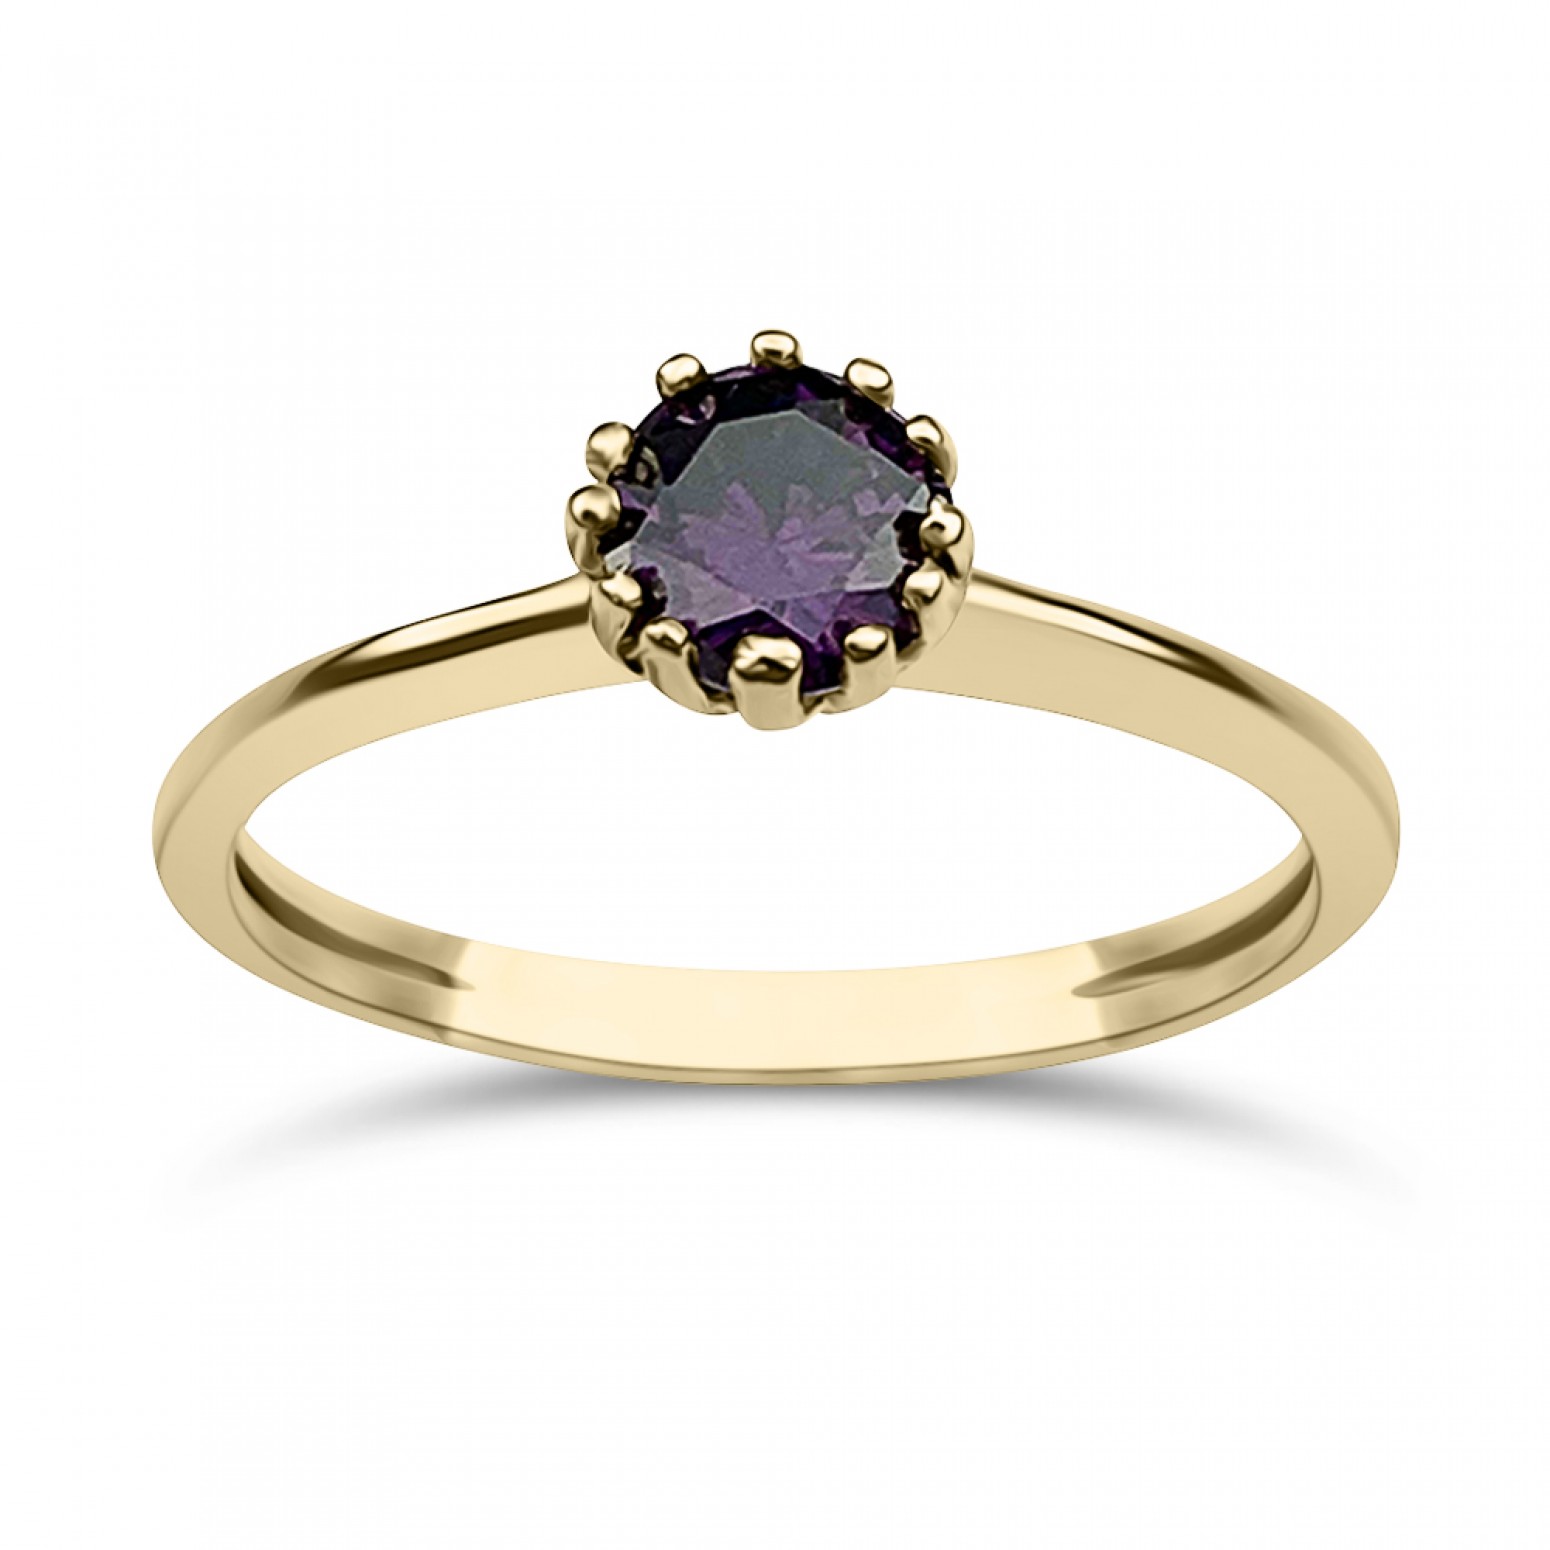 Solitaire ring 14K gold with purple zircon, da3674 ENGAGEMENT RINGS Κοσμηματα - chrilia.gr